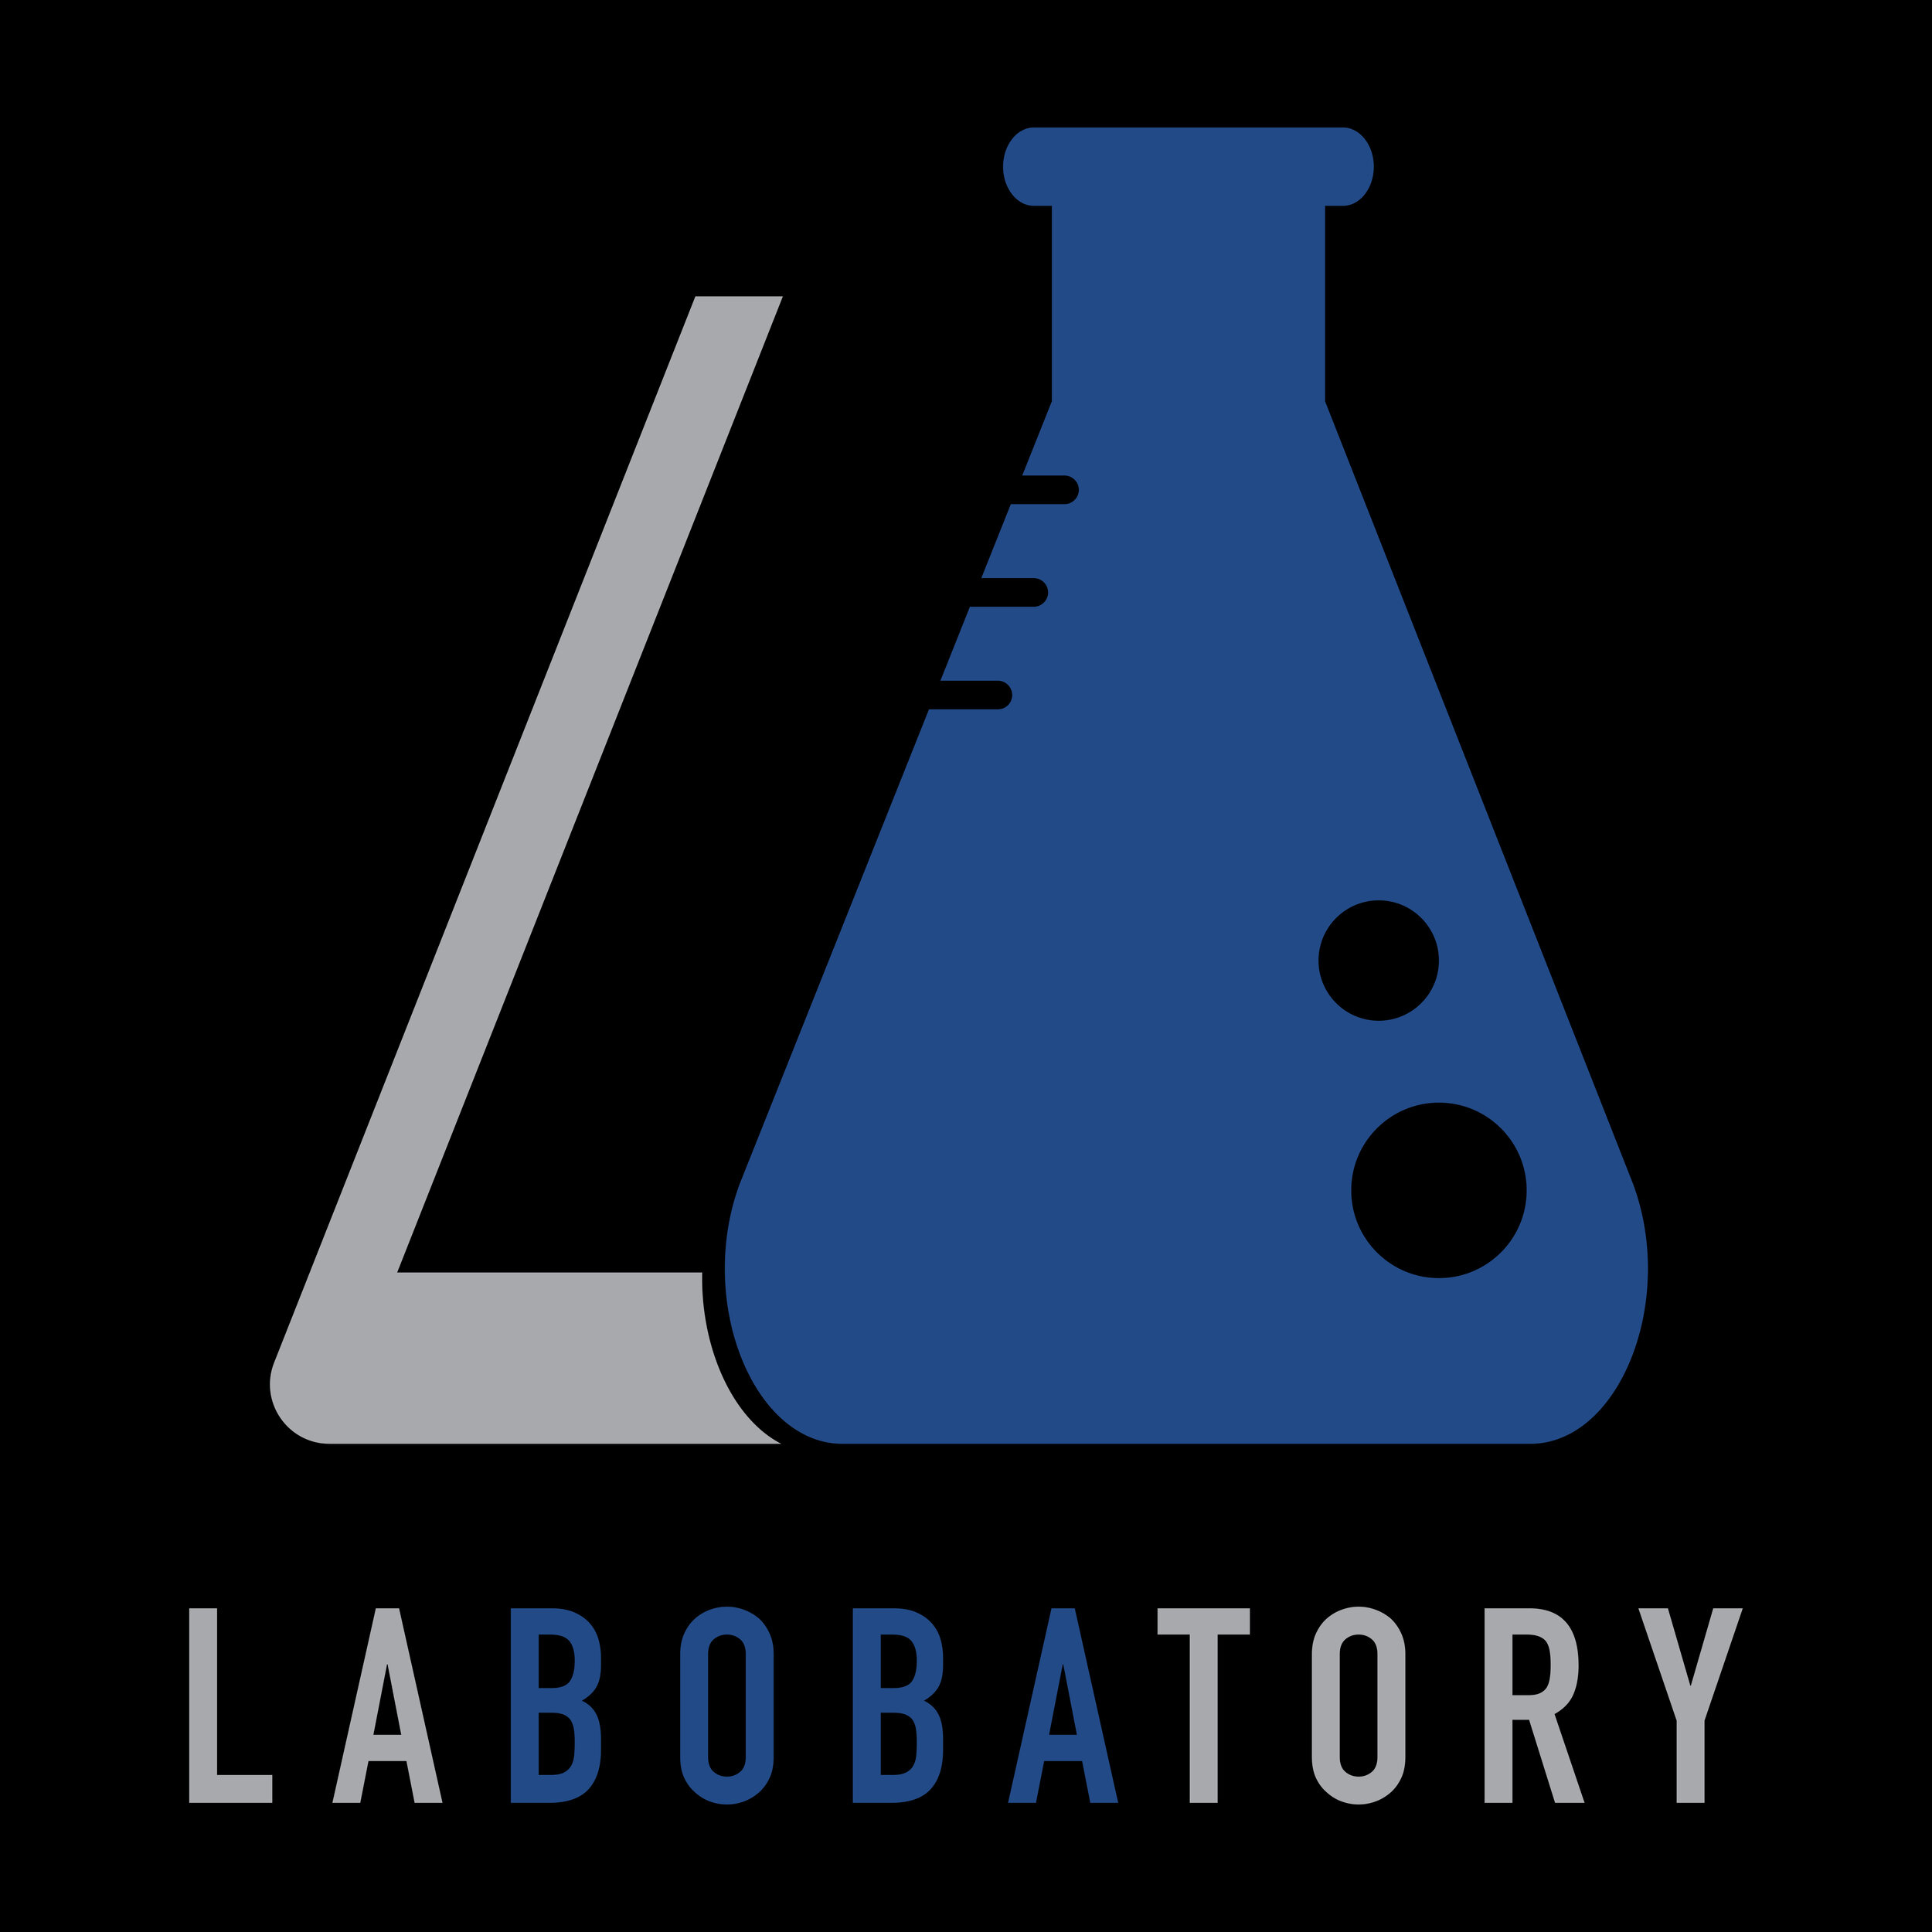 labobatory-logo-updated2019.jpg